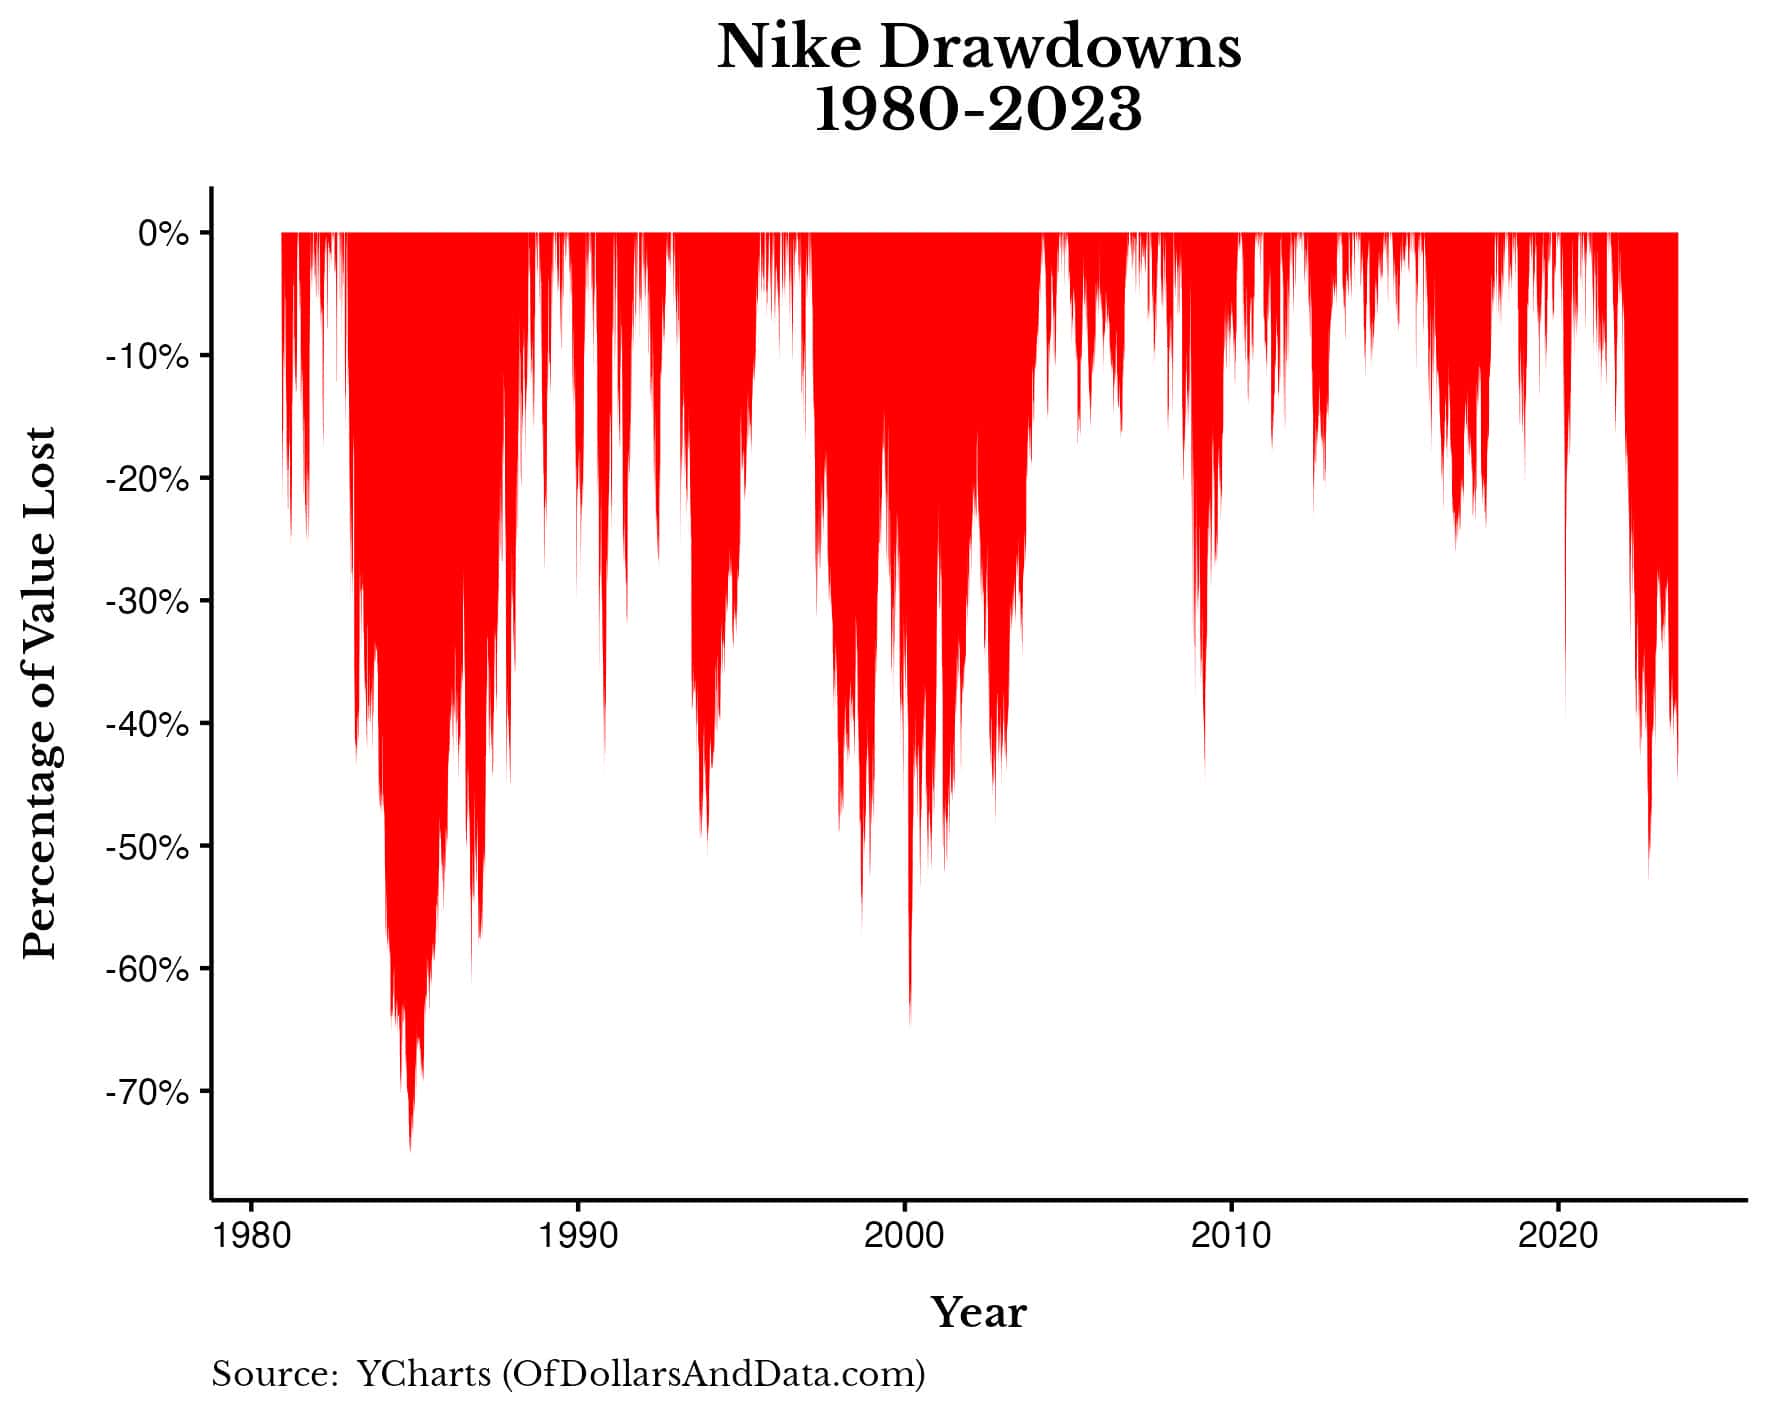 Nike Drawdowns from 1980-2023